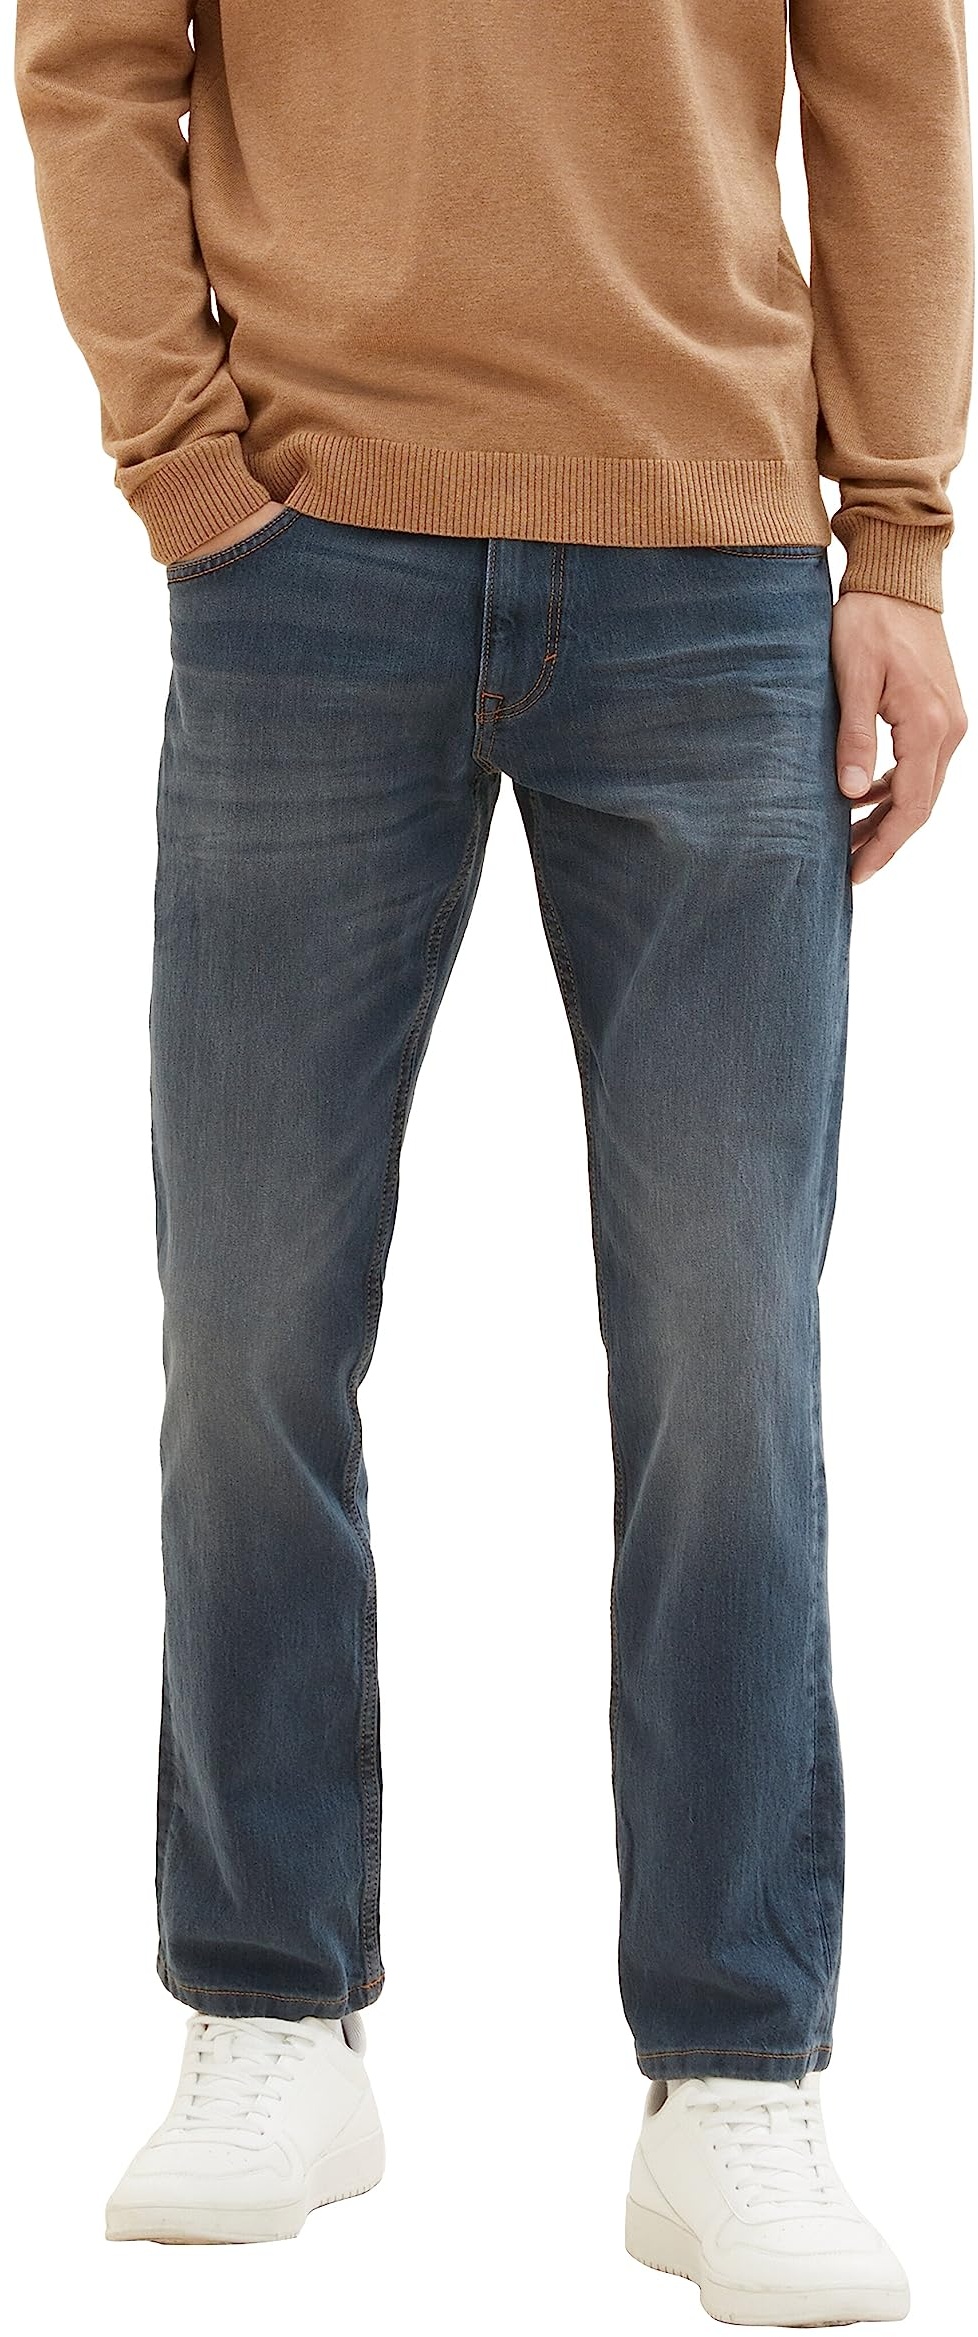 TOM TAILOR Herren Marvin Straight Jeans, 10281 - Mid Stone Wash Denim, 31/32